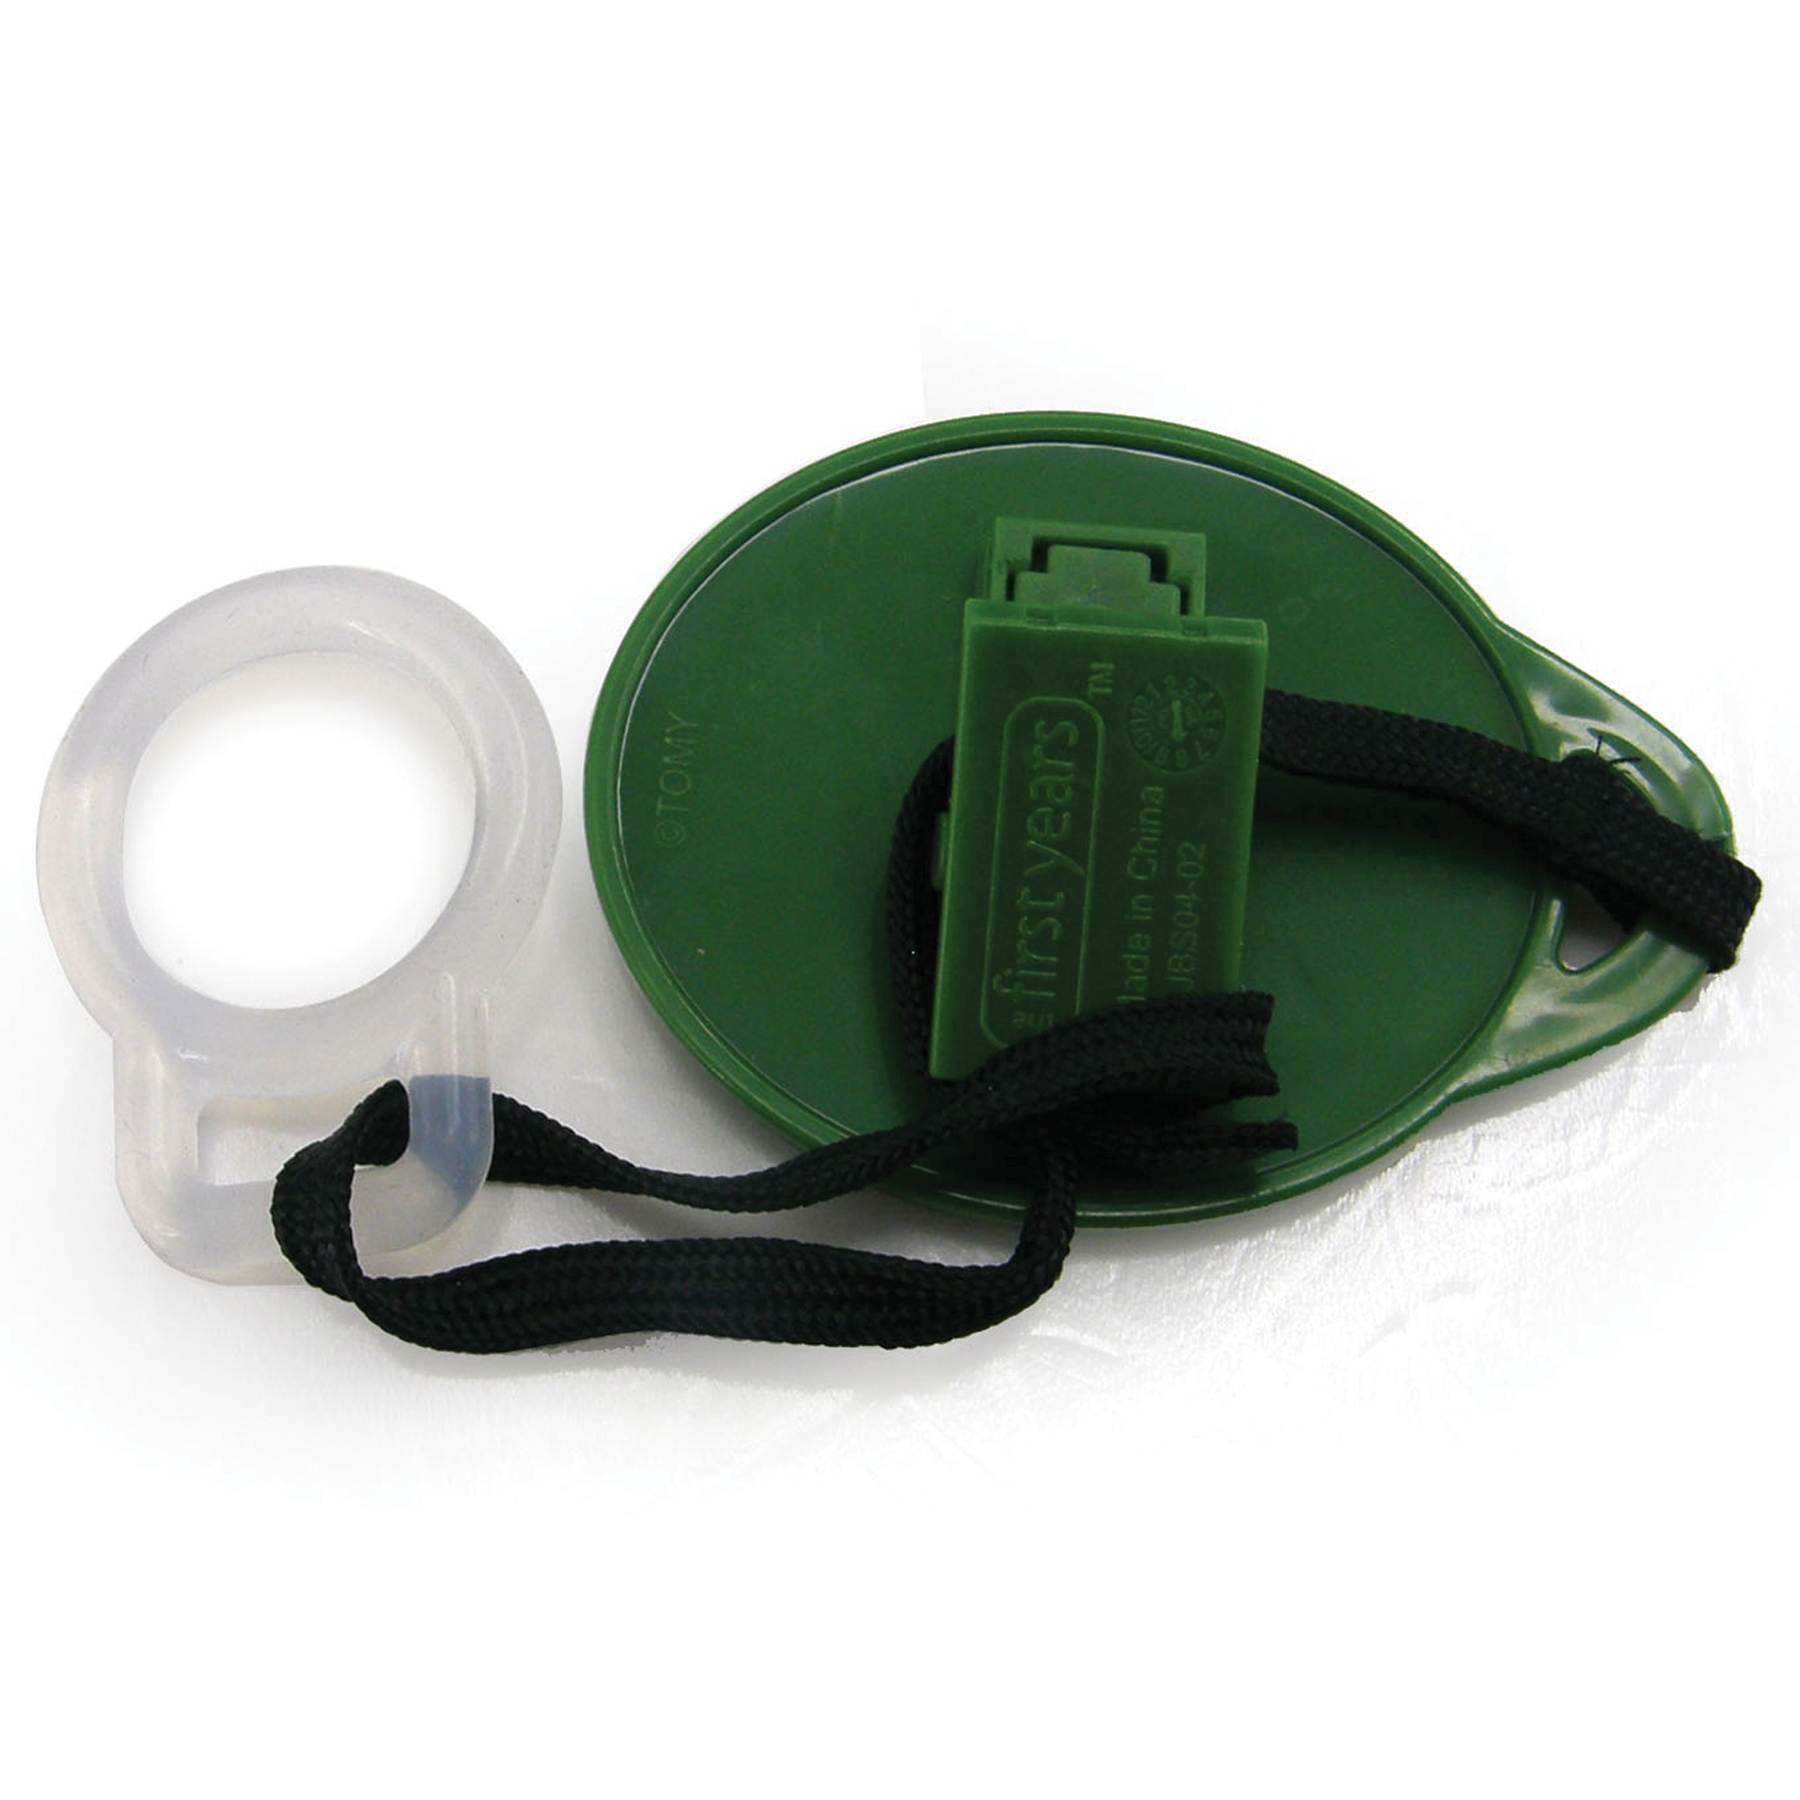 ... John Deere pacifier clip. John Deere green clip features a tractor on